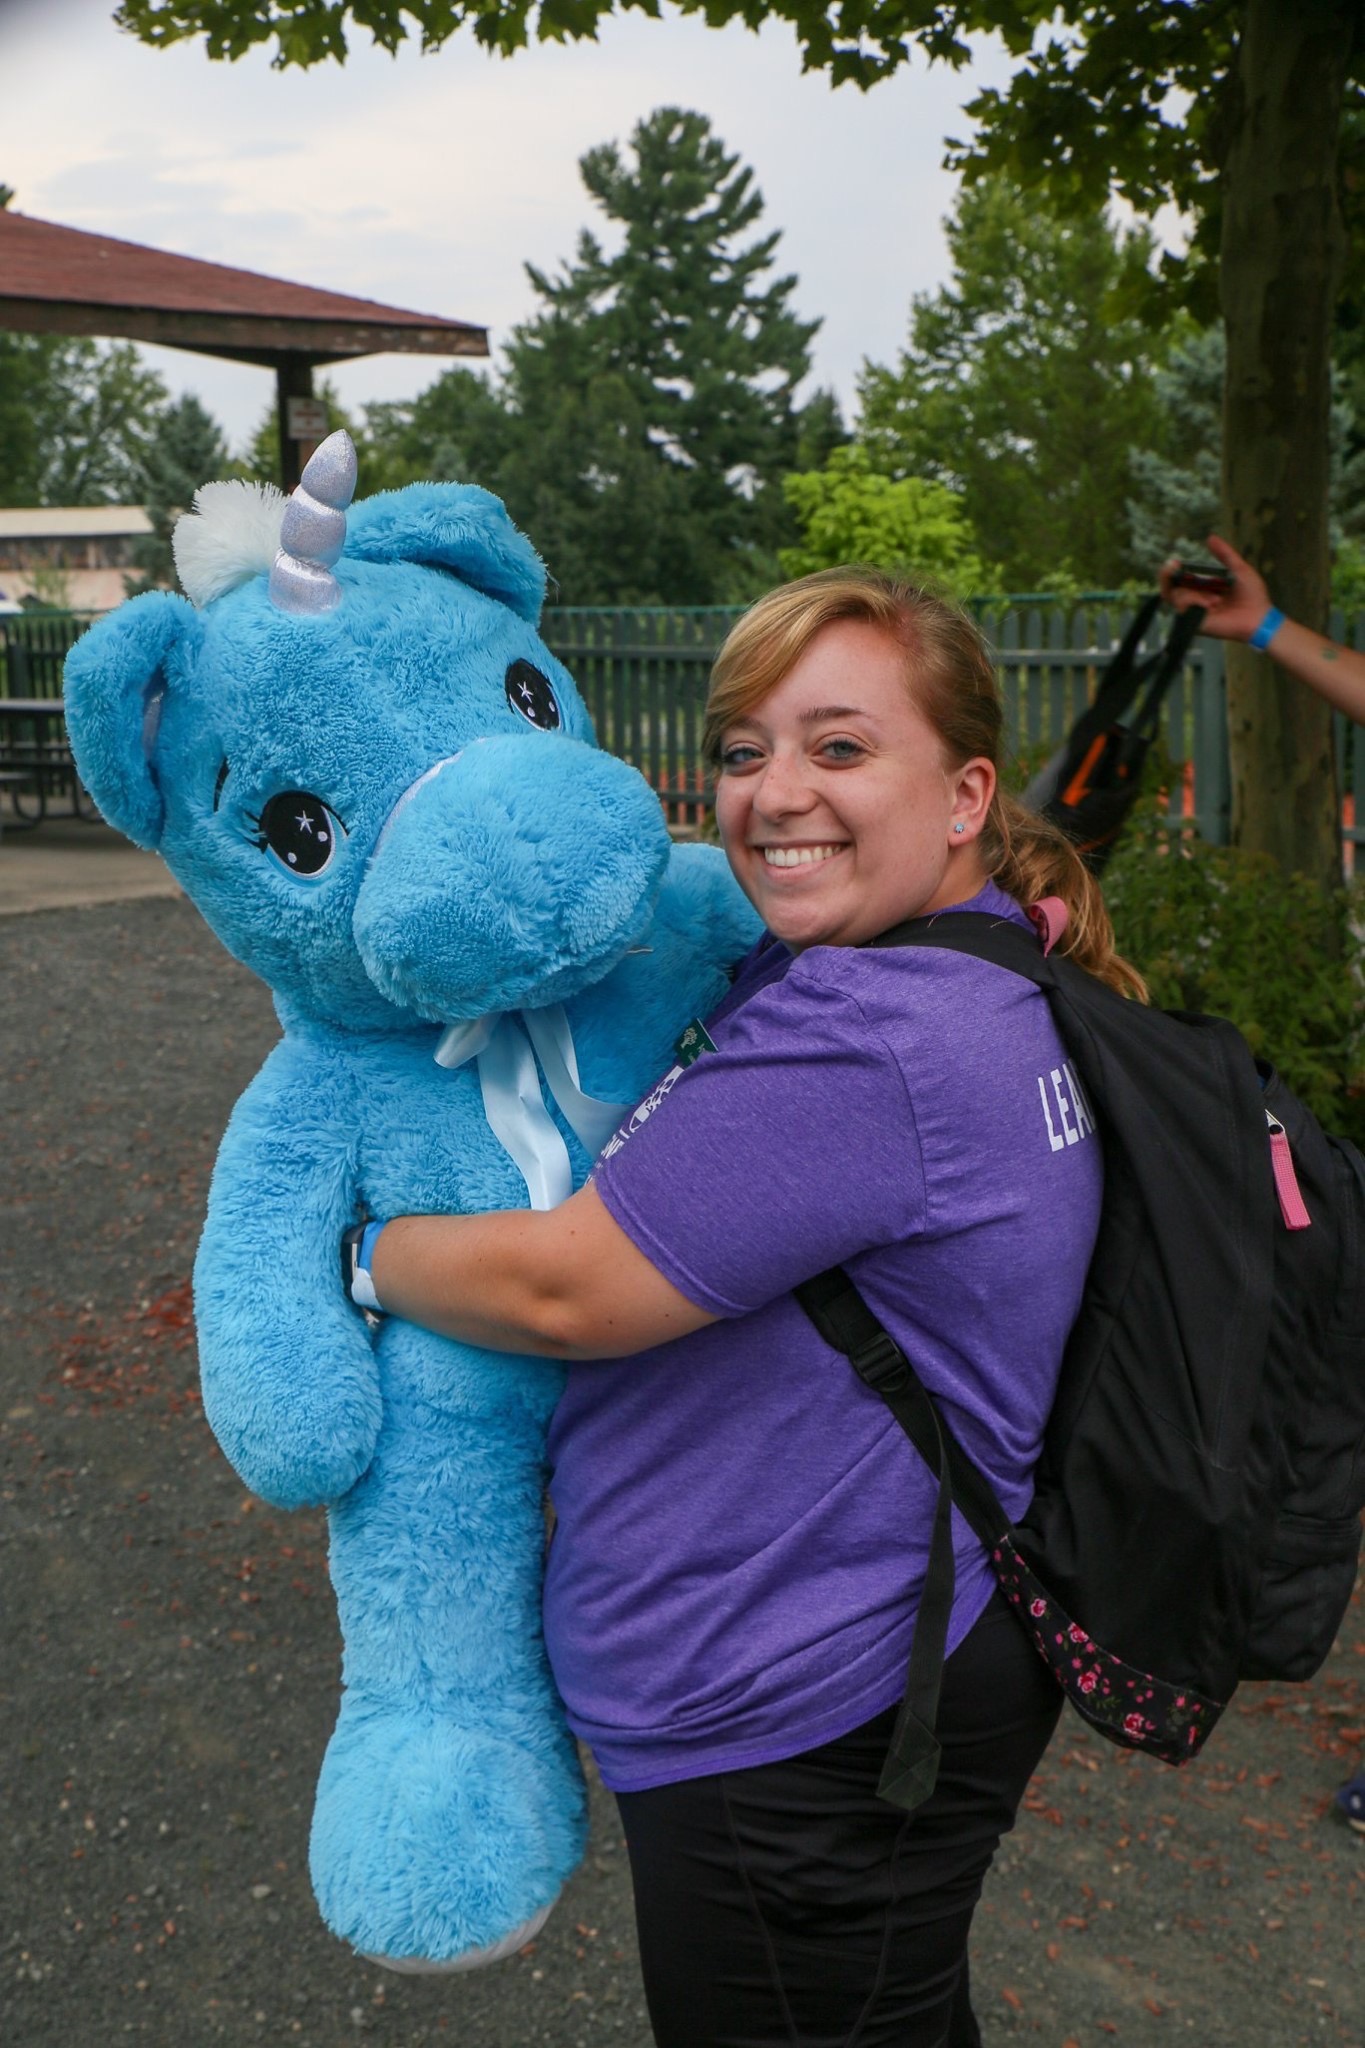 Amanda wearing a purple t-shirt, black pants, and a backpack smiling while hugging an oversized blue stuffed unicorn.